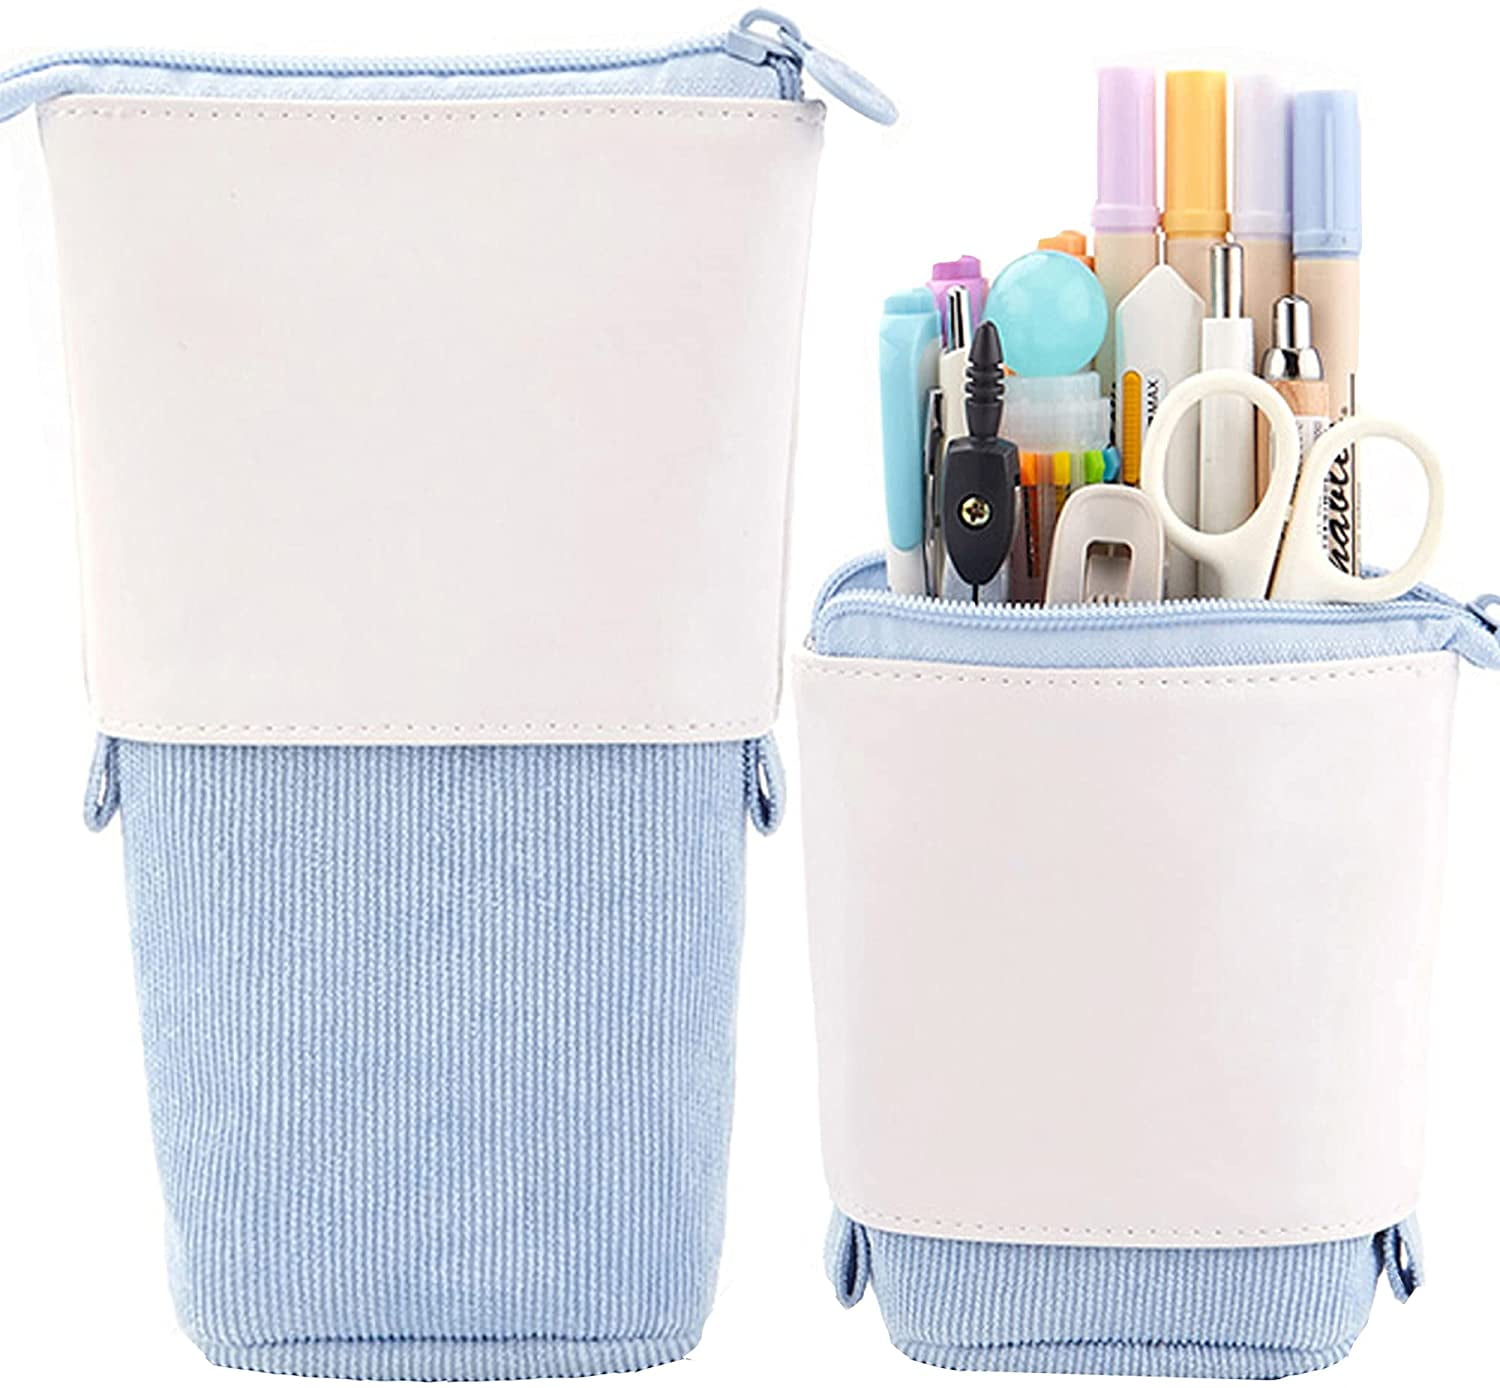 Pouch nylon pen pencil Storage holder organizer pocket case Bag 20*12.5*2.5 CM 